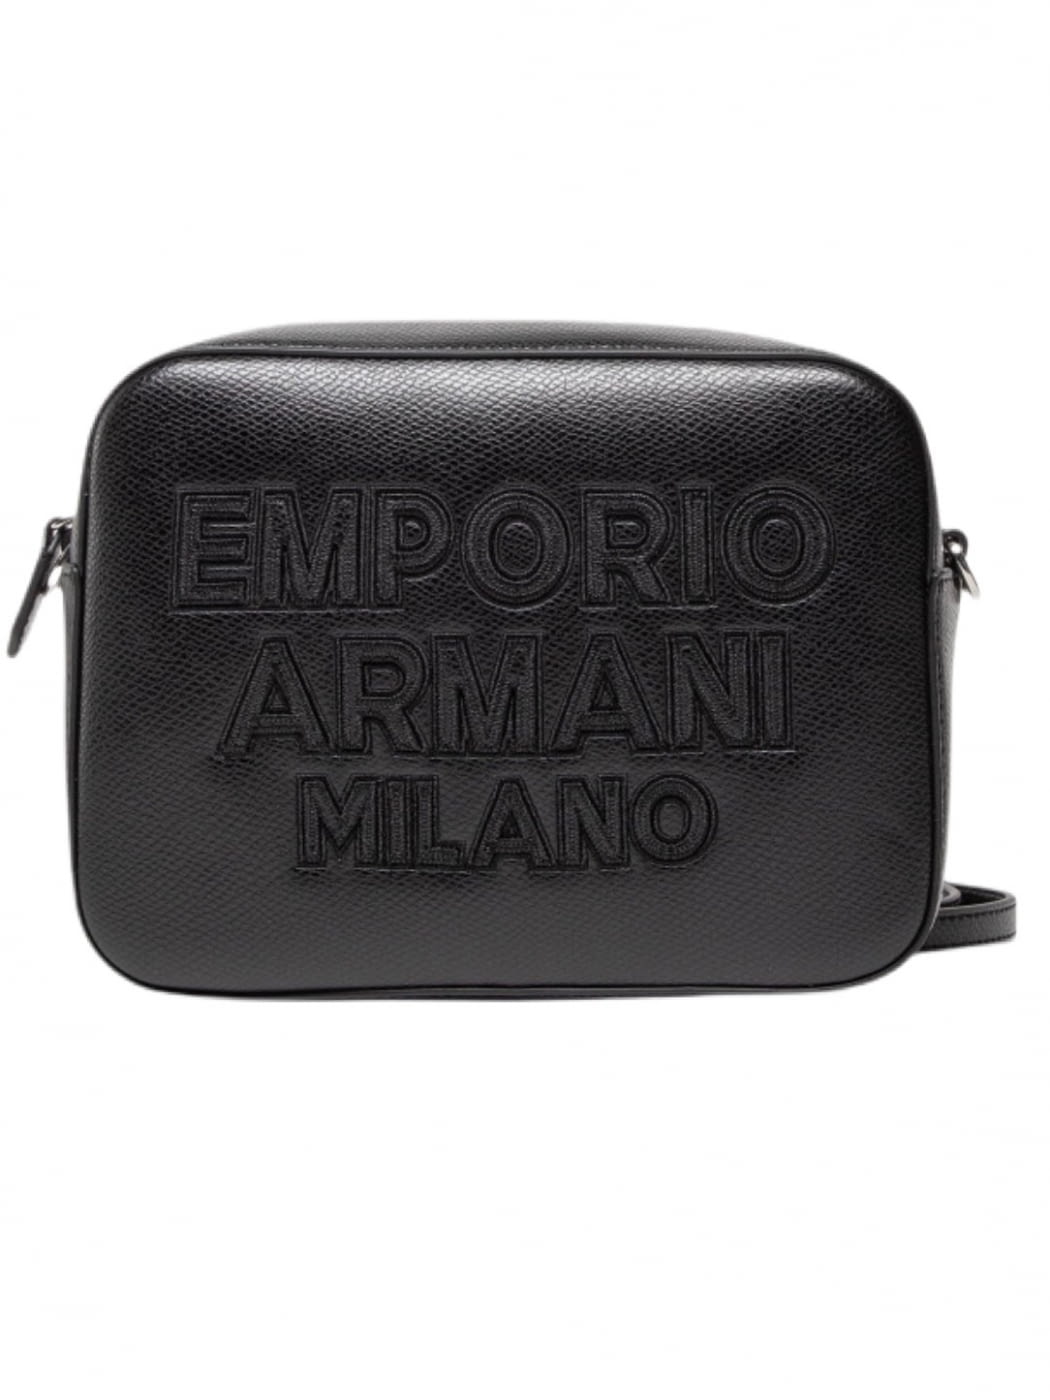 EMPORIO ARMANI bolso negro con logotipo en relieve